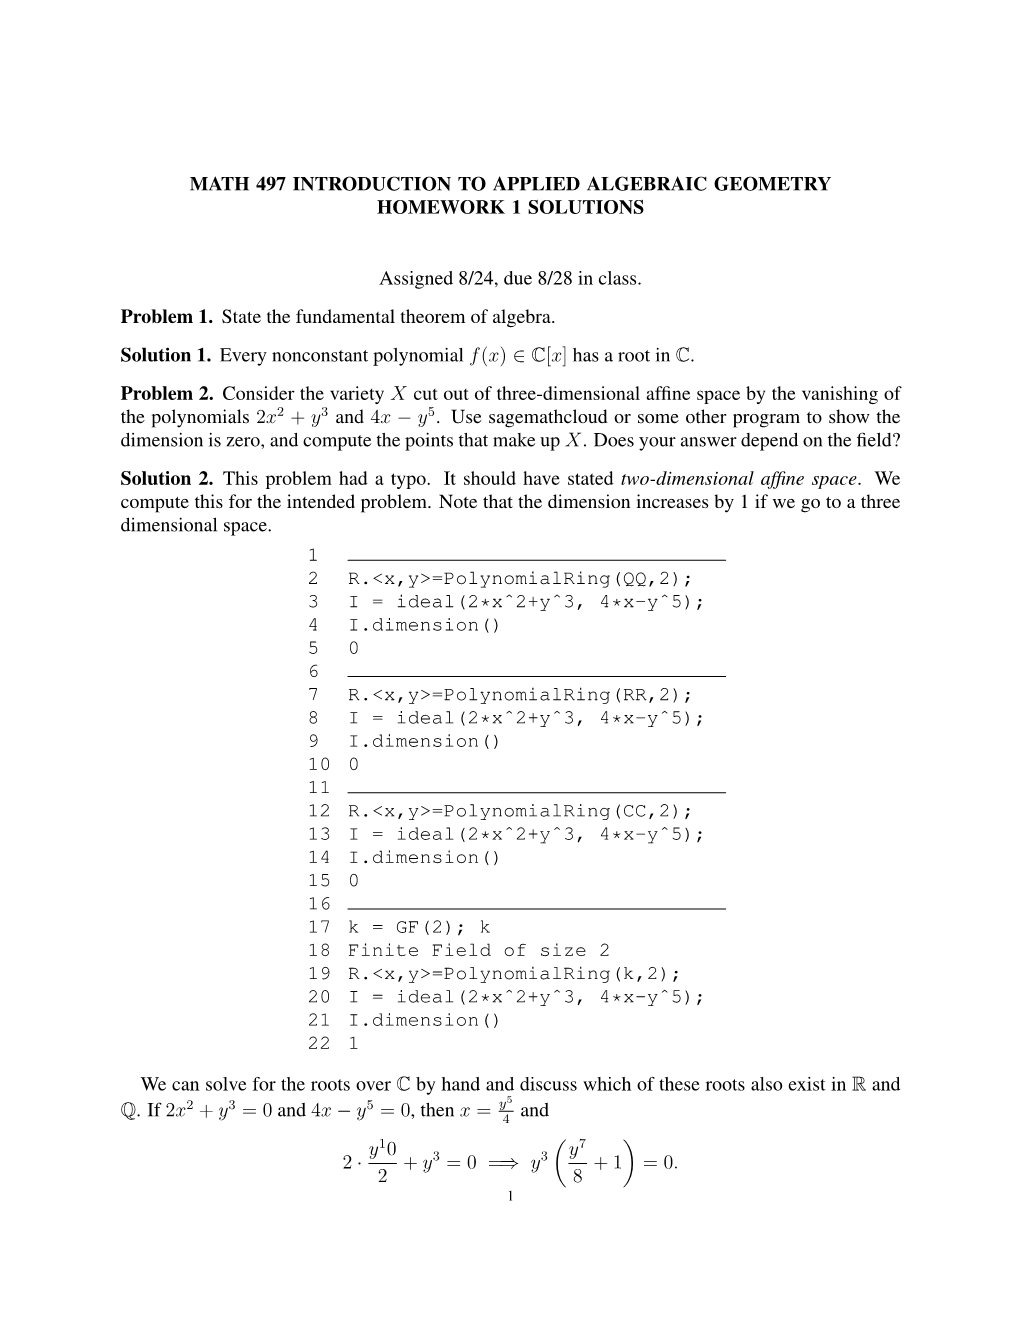 Math 497 Introduction to Applied Algebraic Geometry Homework 1 Solutions